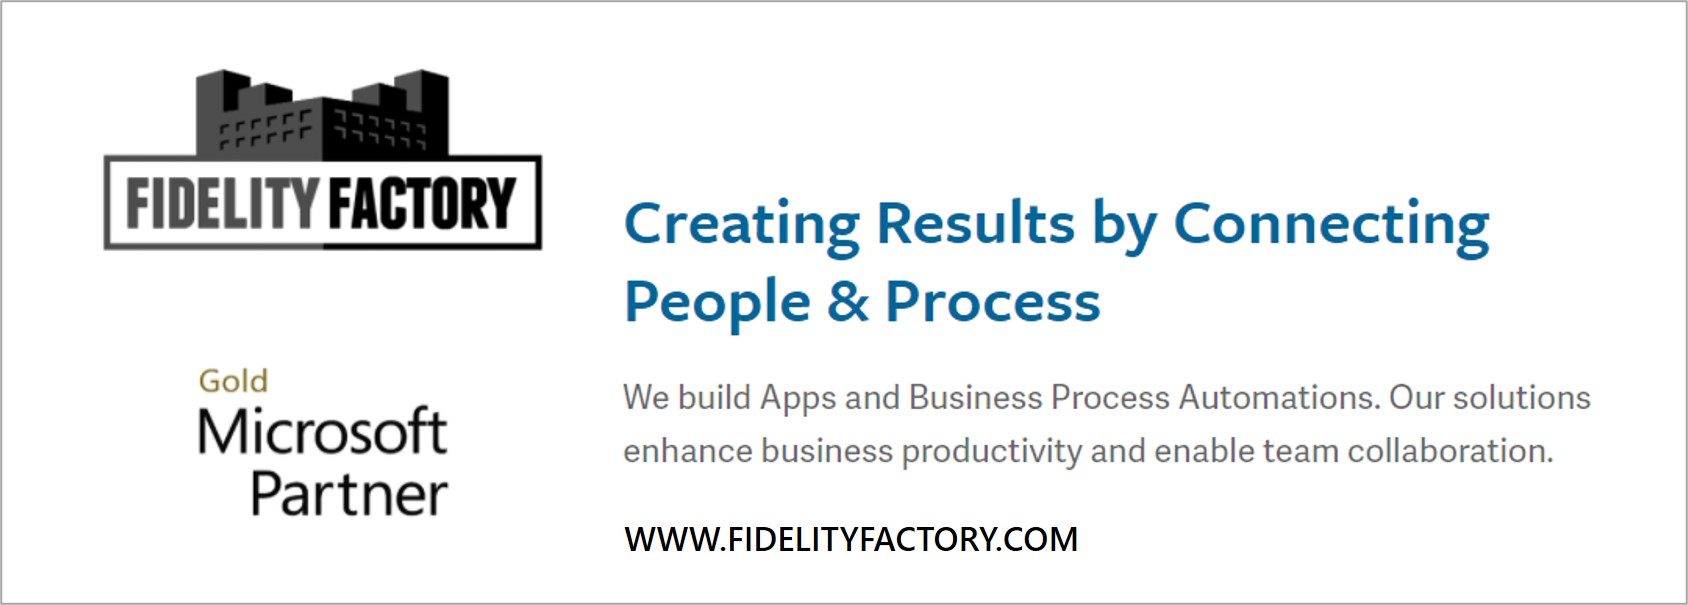 Fidelity Factory banner image - fidelityfactory.com